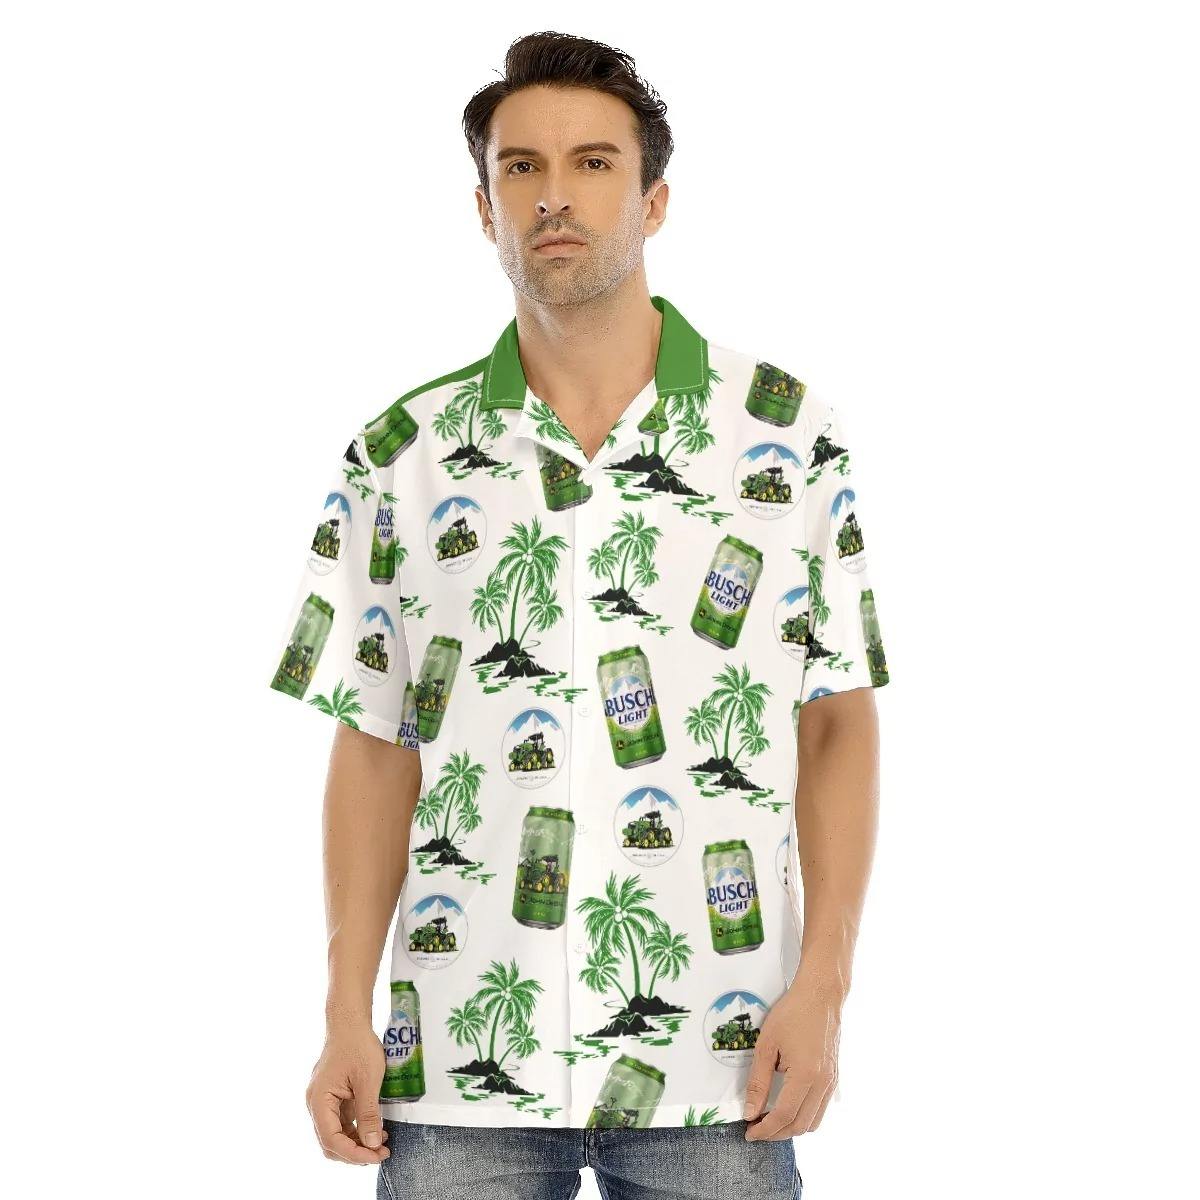 Busch Light John Deere Hawaiian Shirt Tropical Coconut Tree For The Farmers